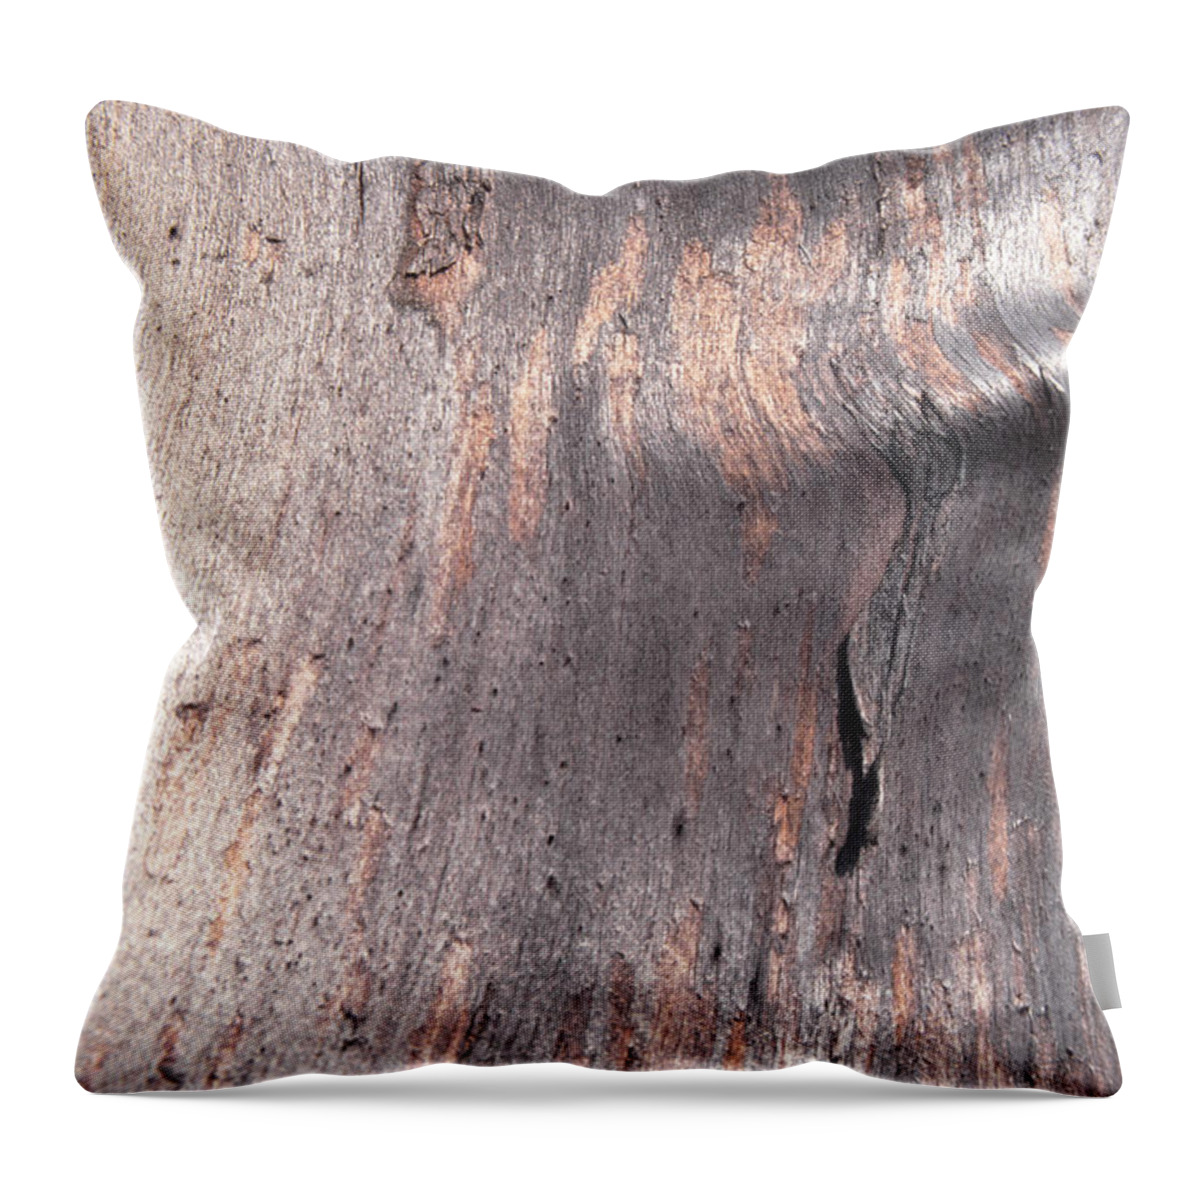 Built Structure Throw Pillow featuring the photograph Tree Bark #8 by John Foxx